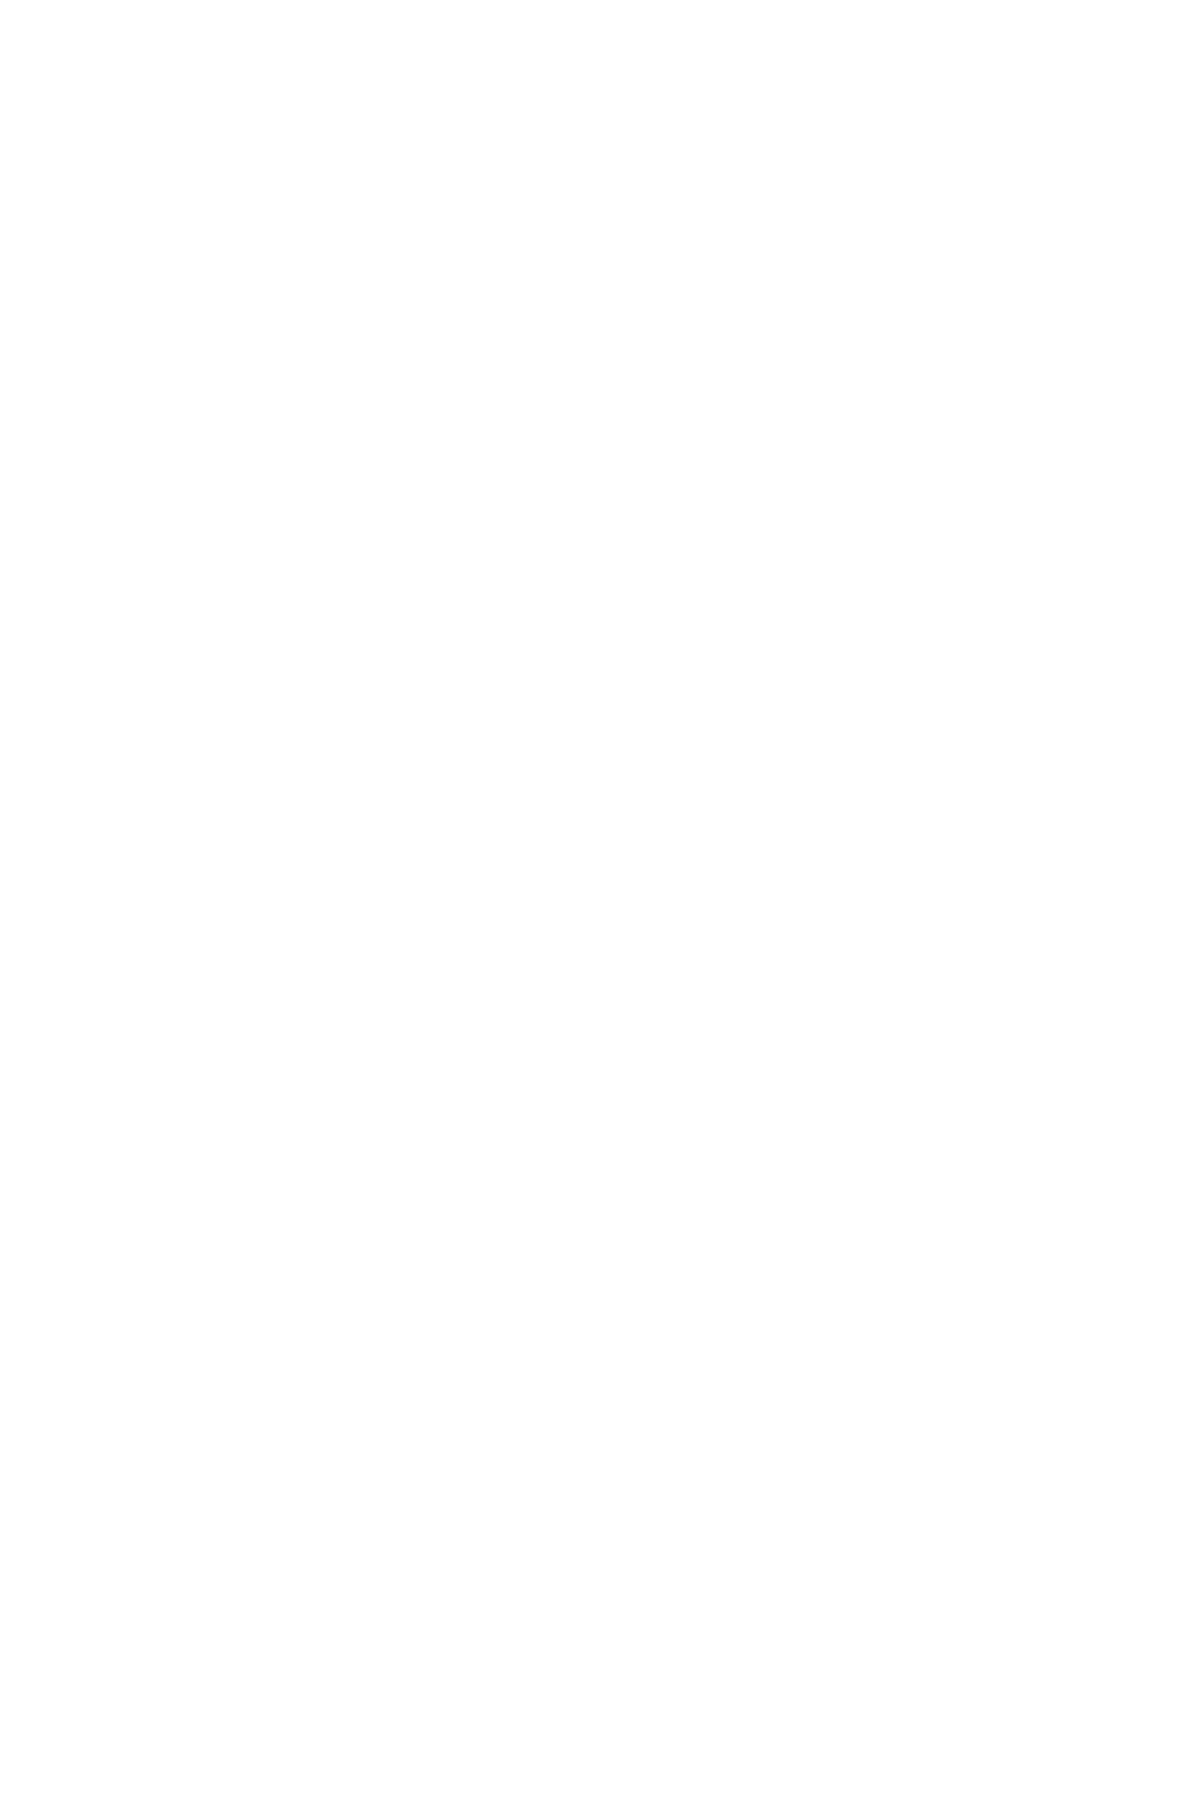 фирменная продукция, художник Ольга Лялина, логотип, карта Таро